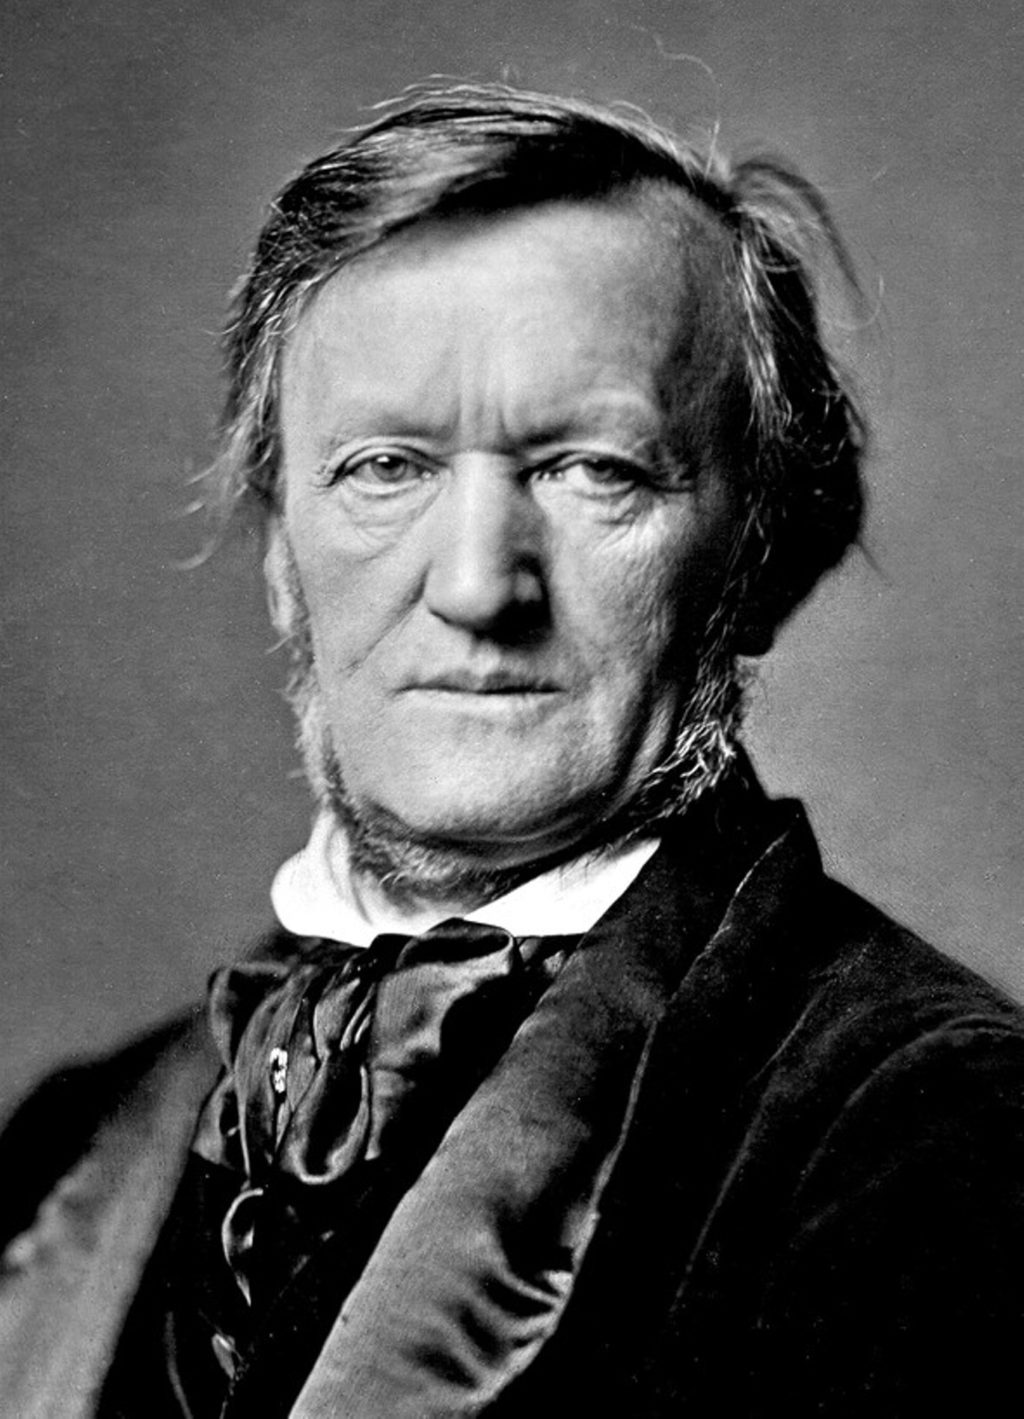 Wagner et l’utopie de l’art total